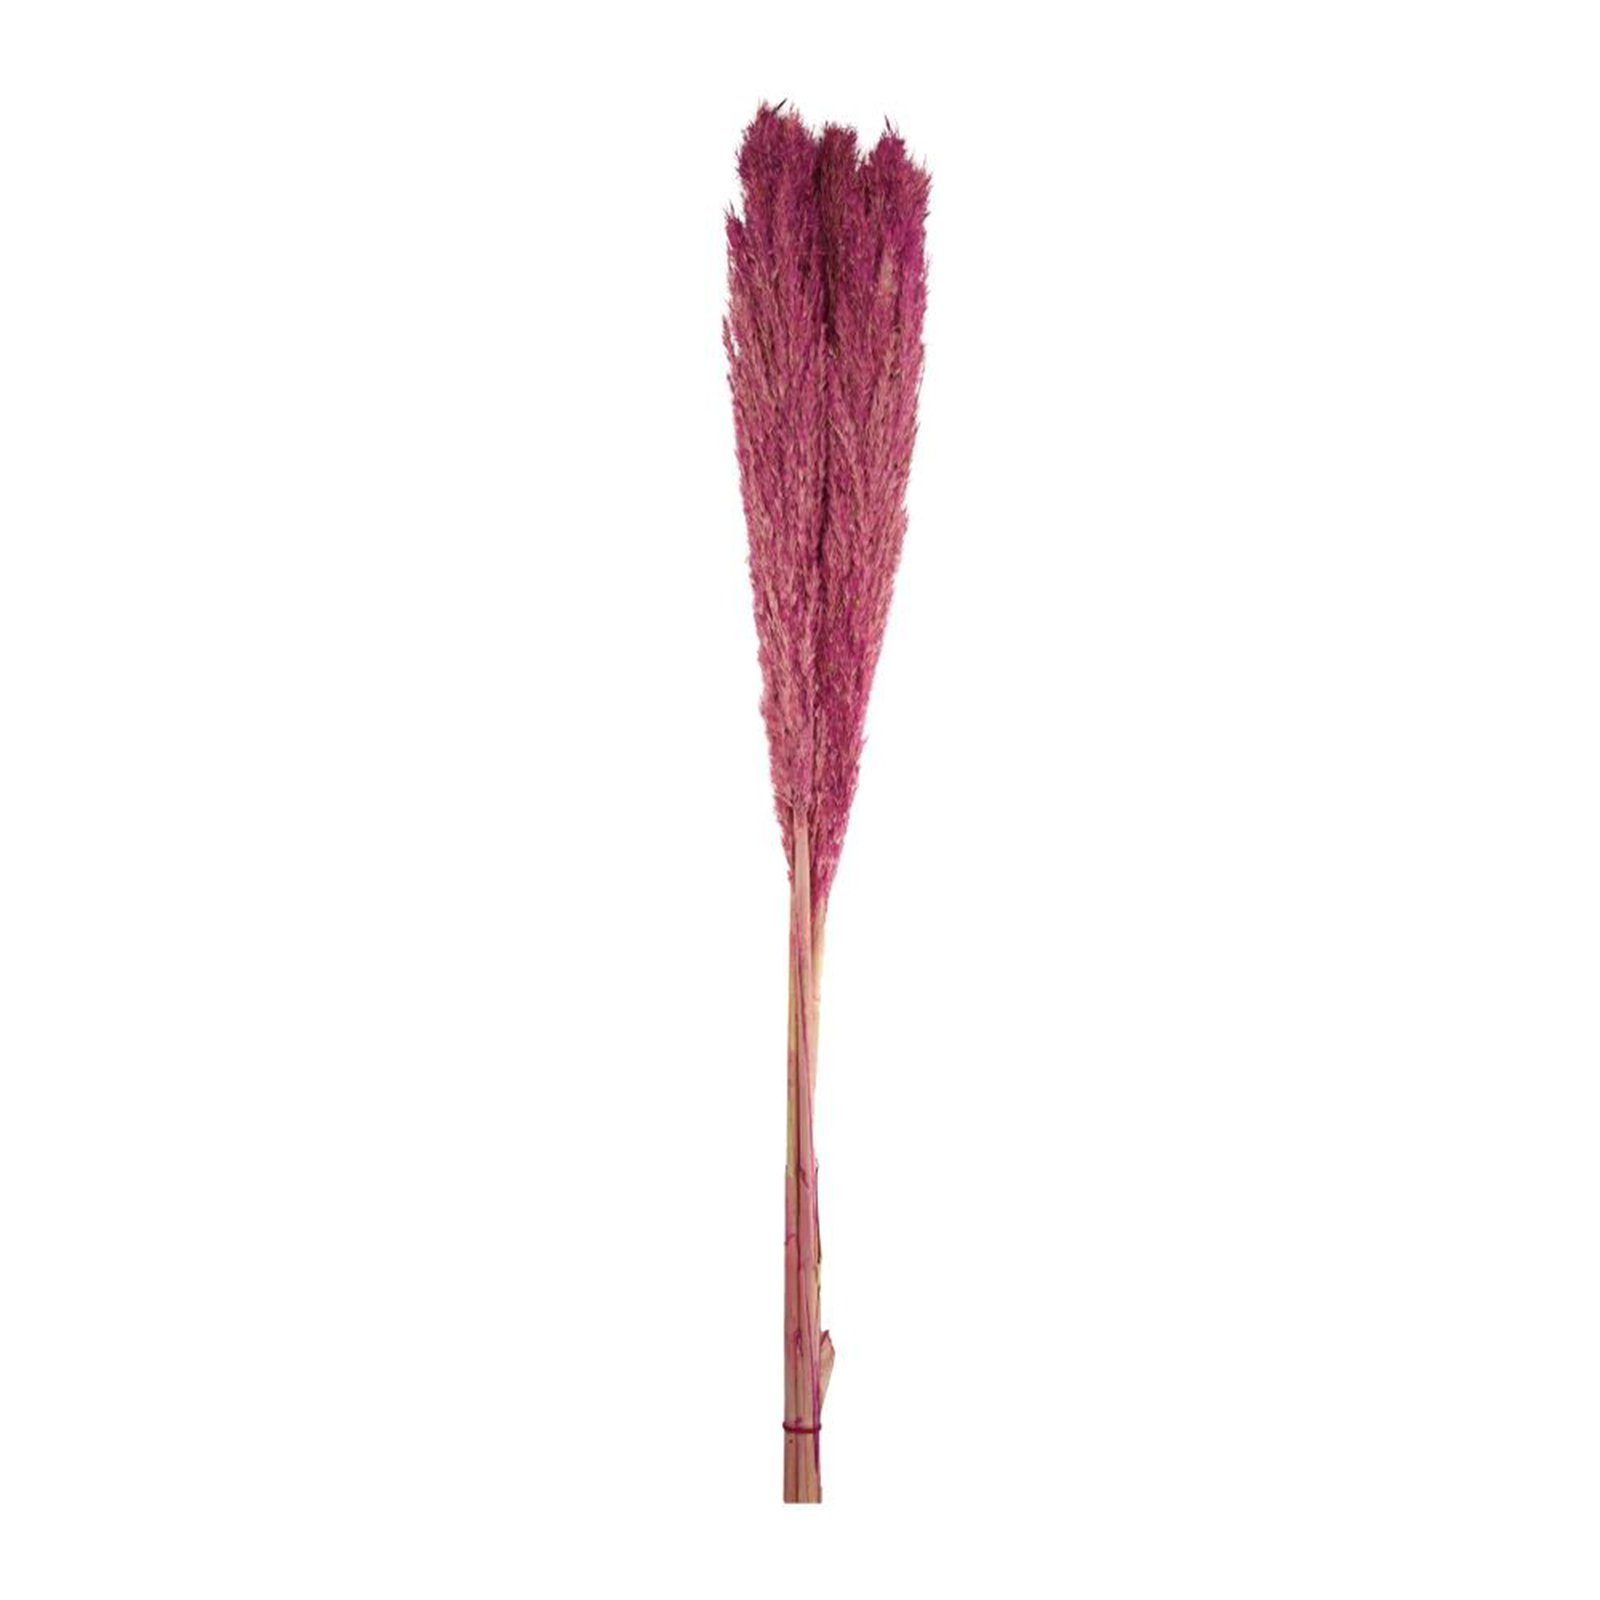 Trockenblume Pfahlrohr pink - Wild reed plume - Arundo donax - 115 cm - 3 Stück, DIJK